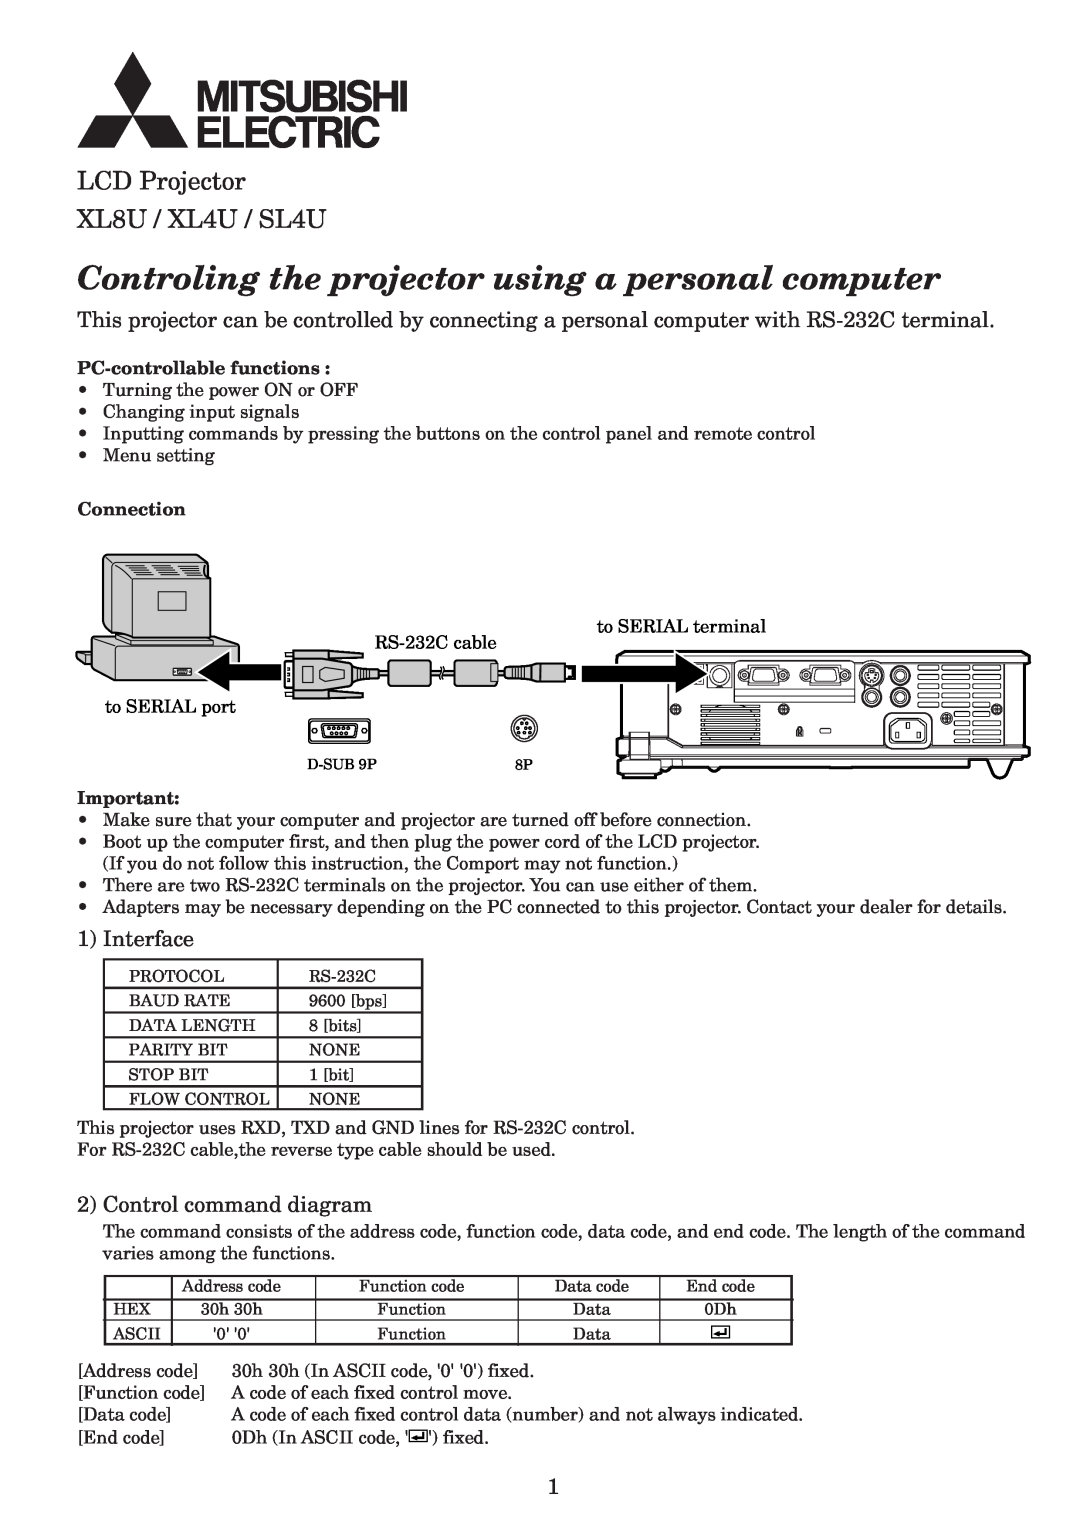 Mitsubishi Electronics XL4U, SL4U manual Interface, Control command diagram, PC-controllable functions, Connection 